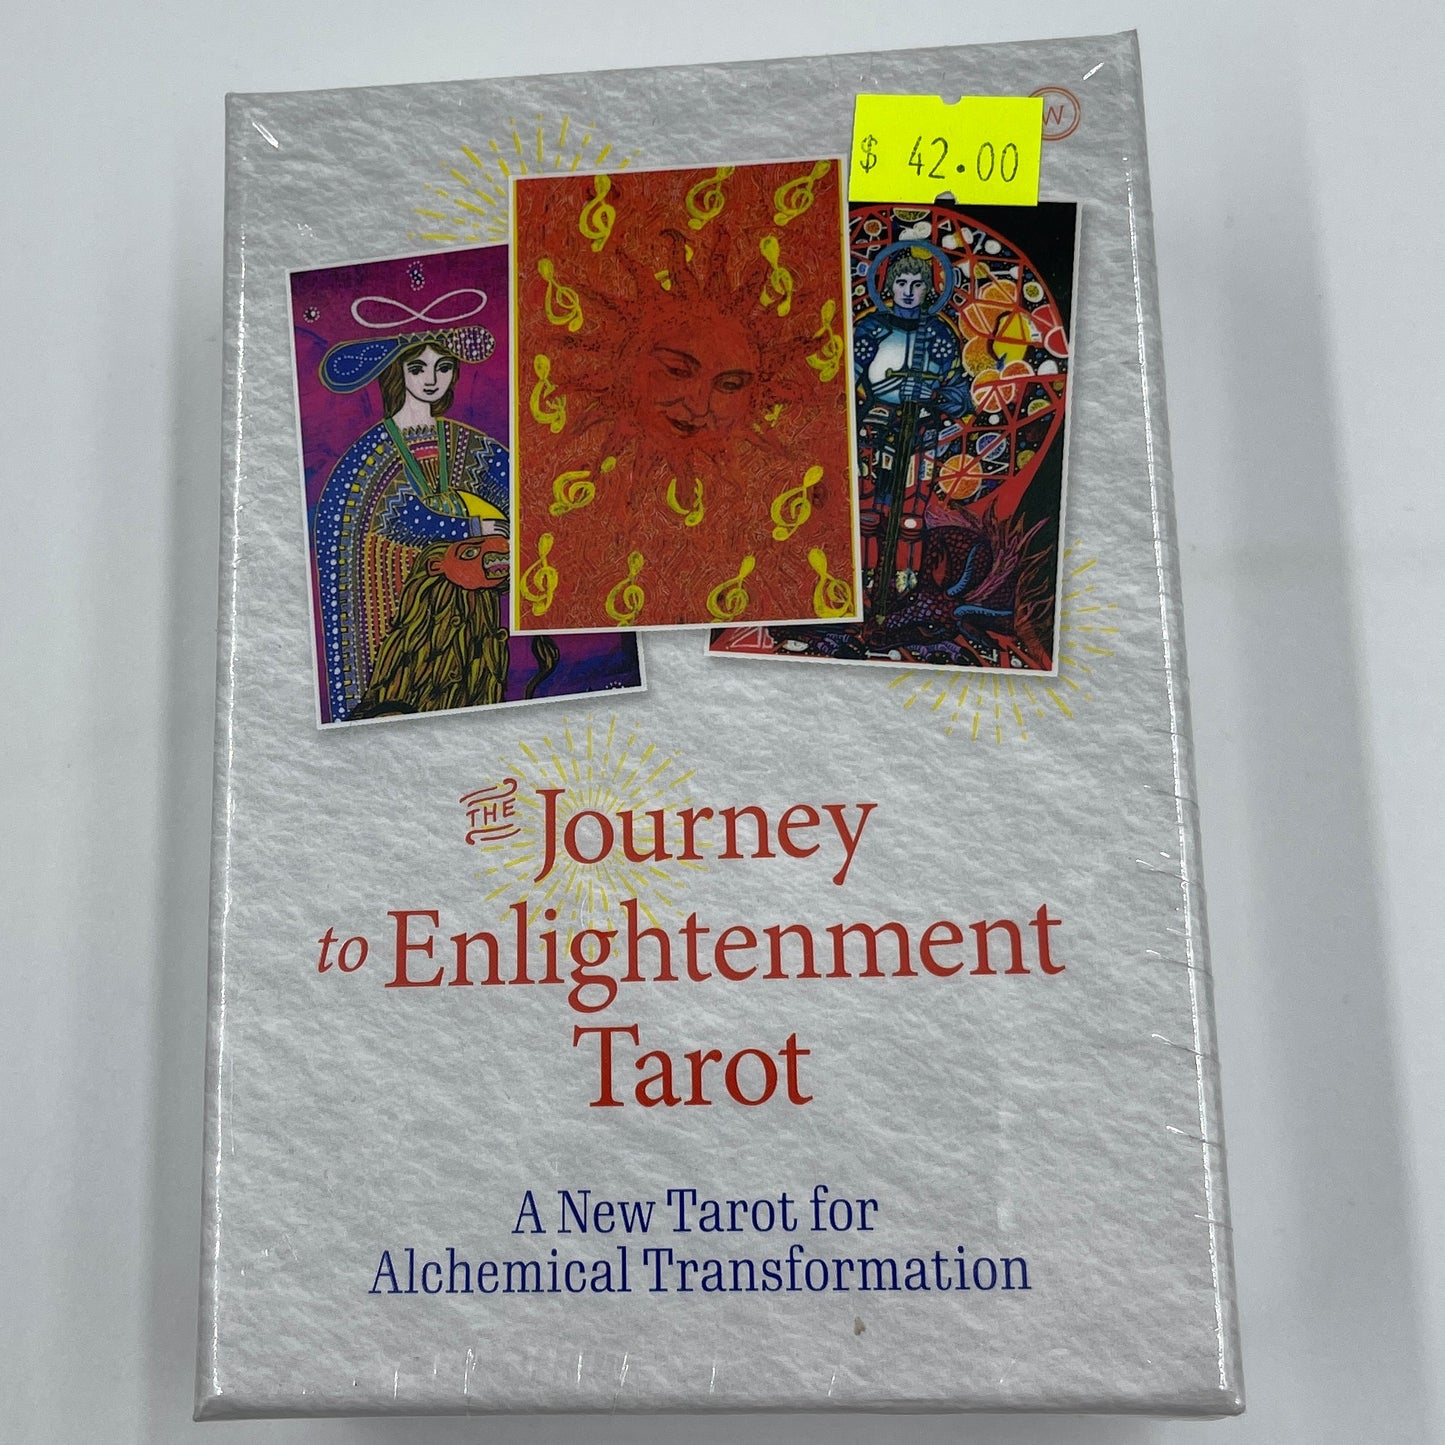 The journey to Enlightenment Tarot